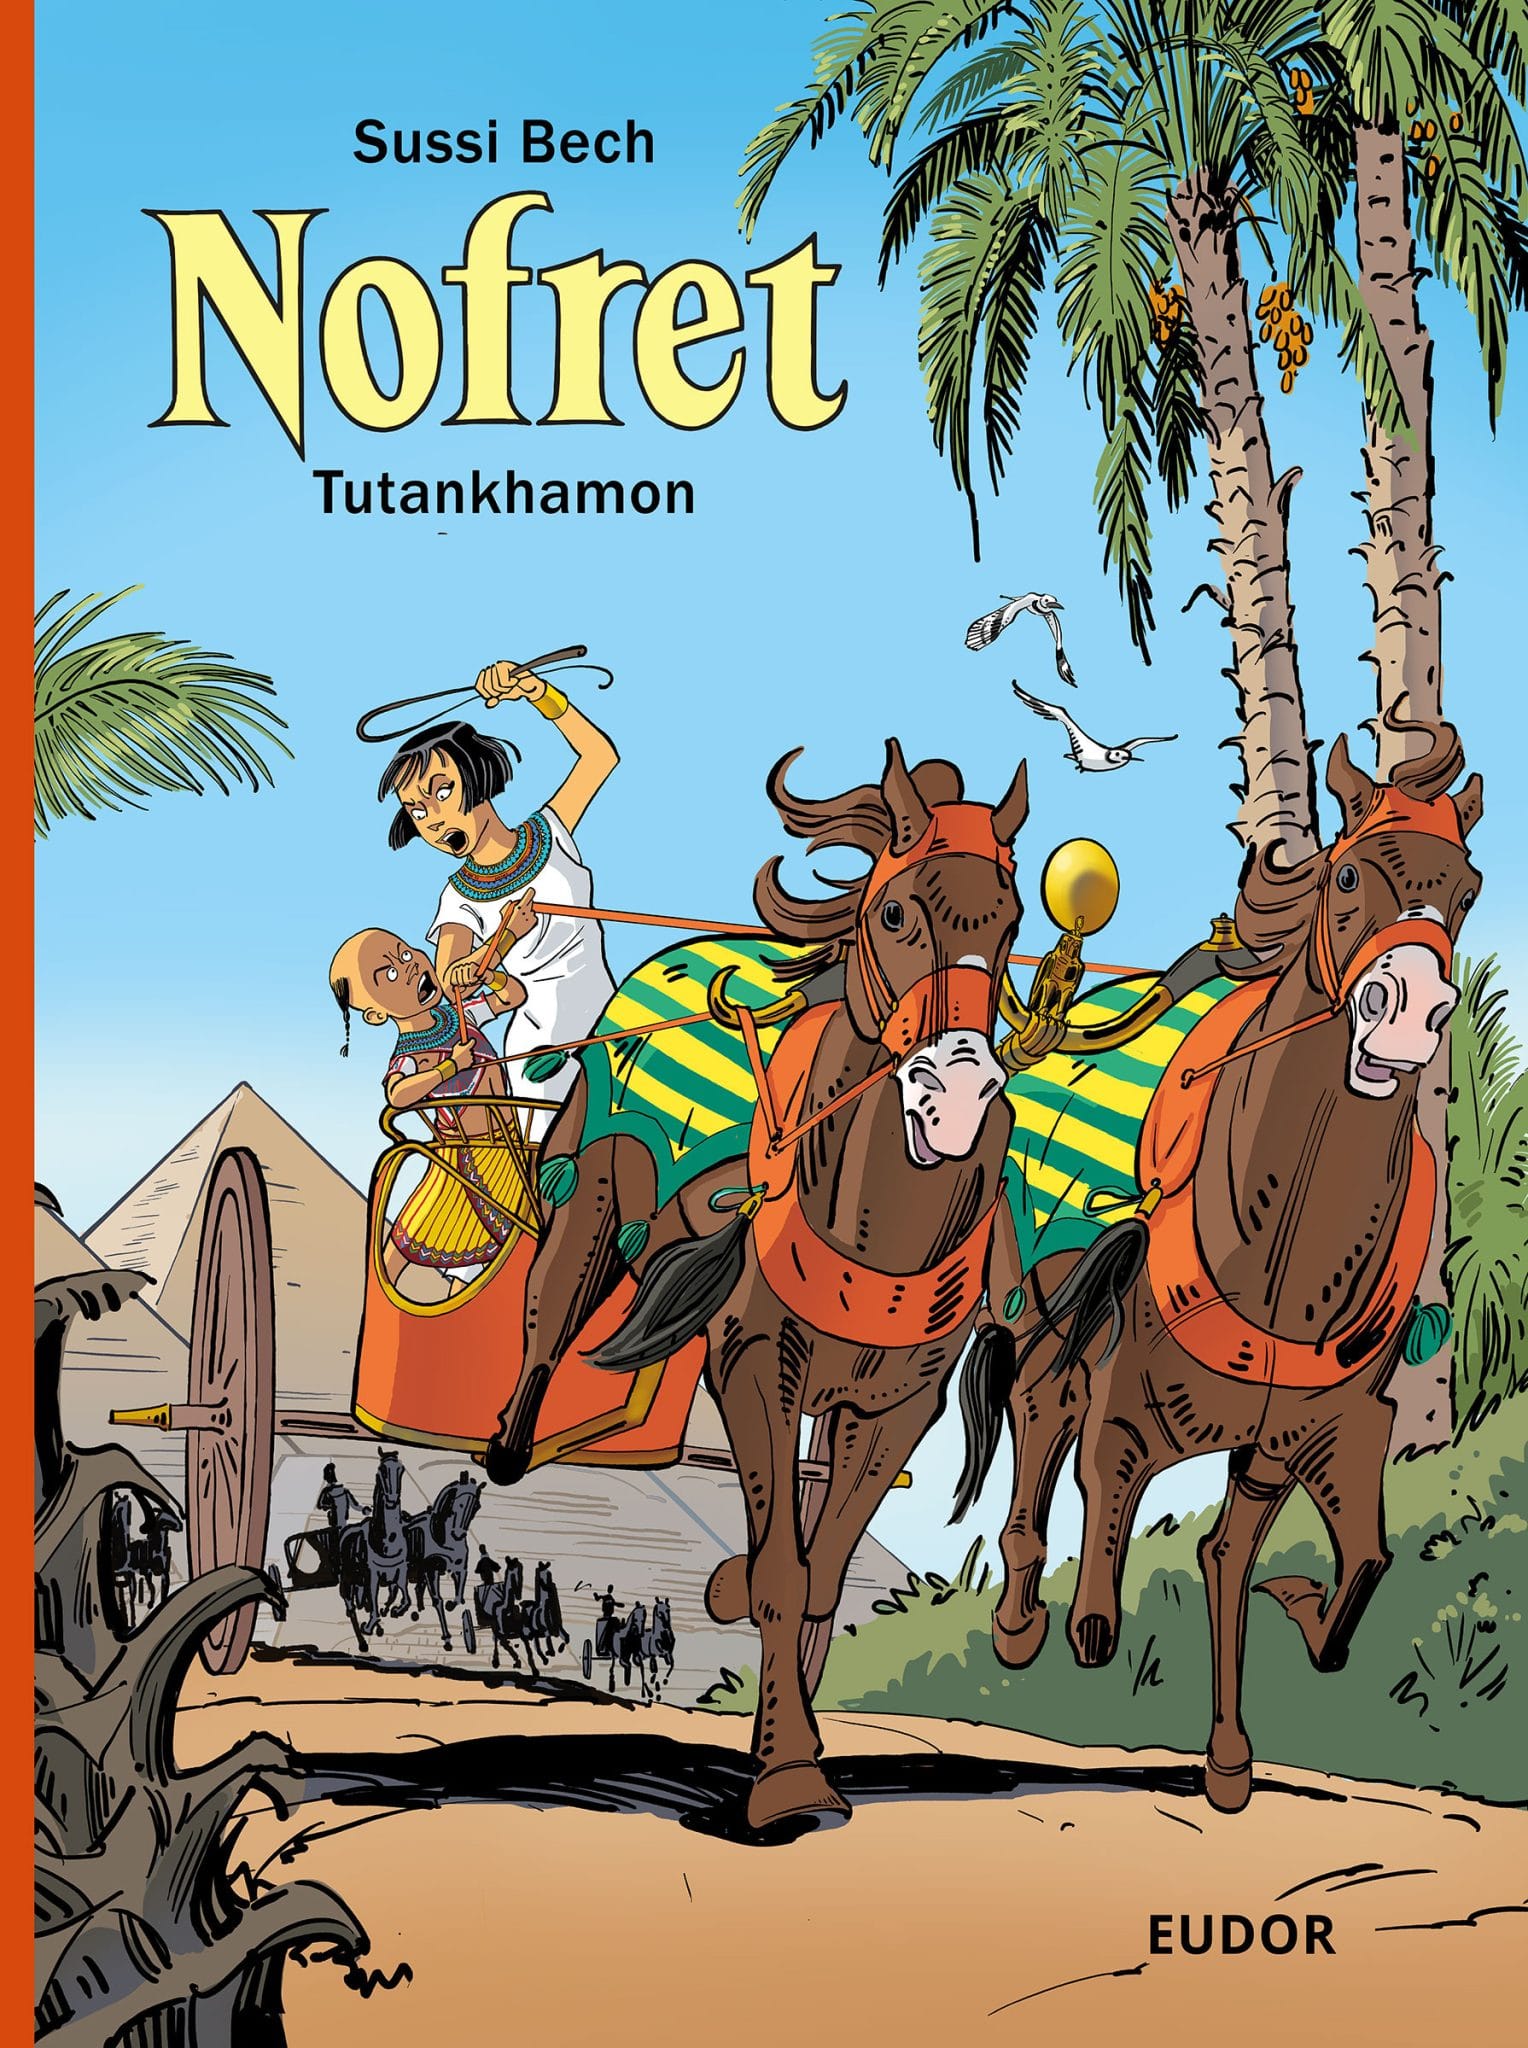 Nofret Nefriti by Sussi Bech - mainstream comics